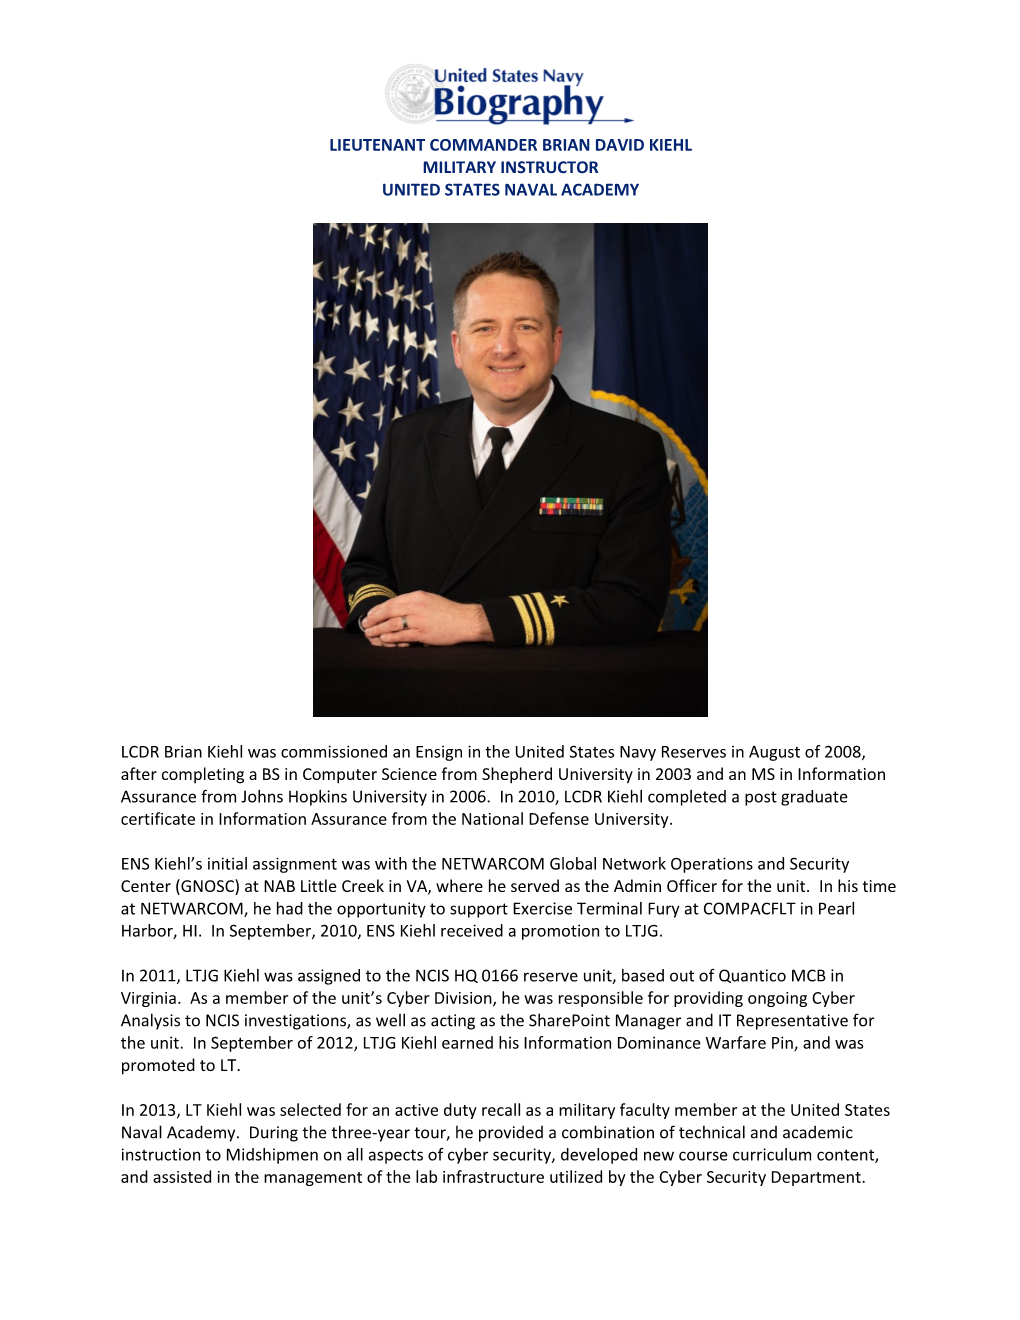 Lieutenant Commander Brian David Kiehl Military Instructor United States Naval Academy